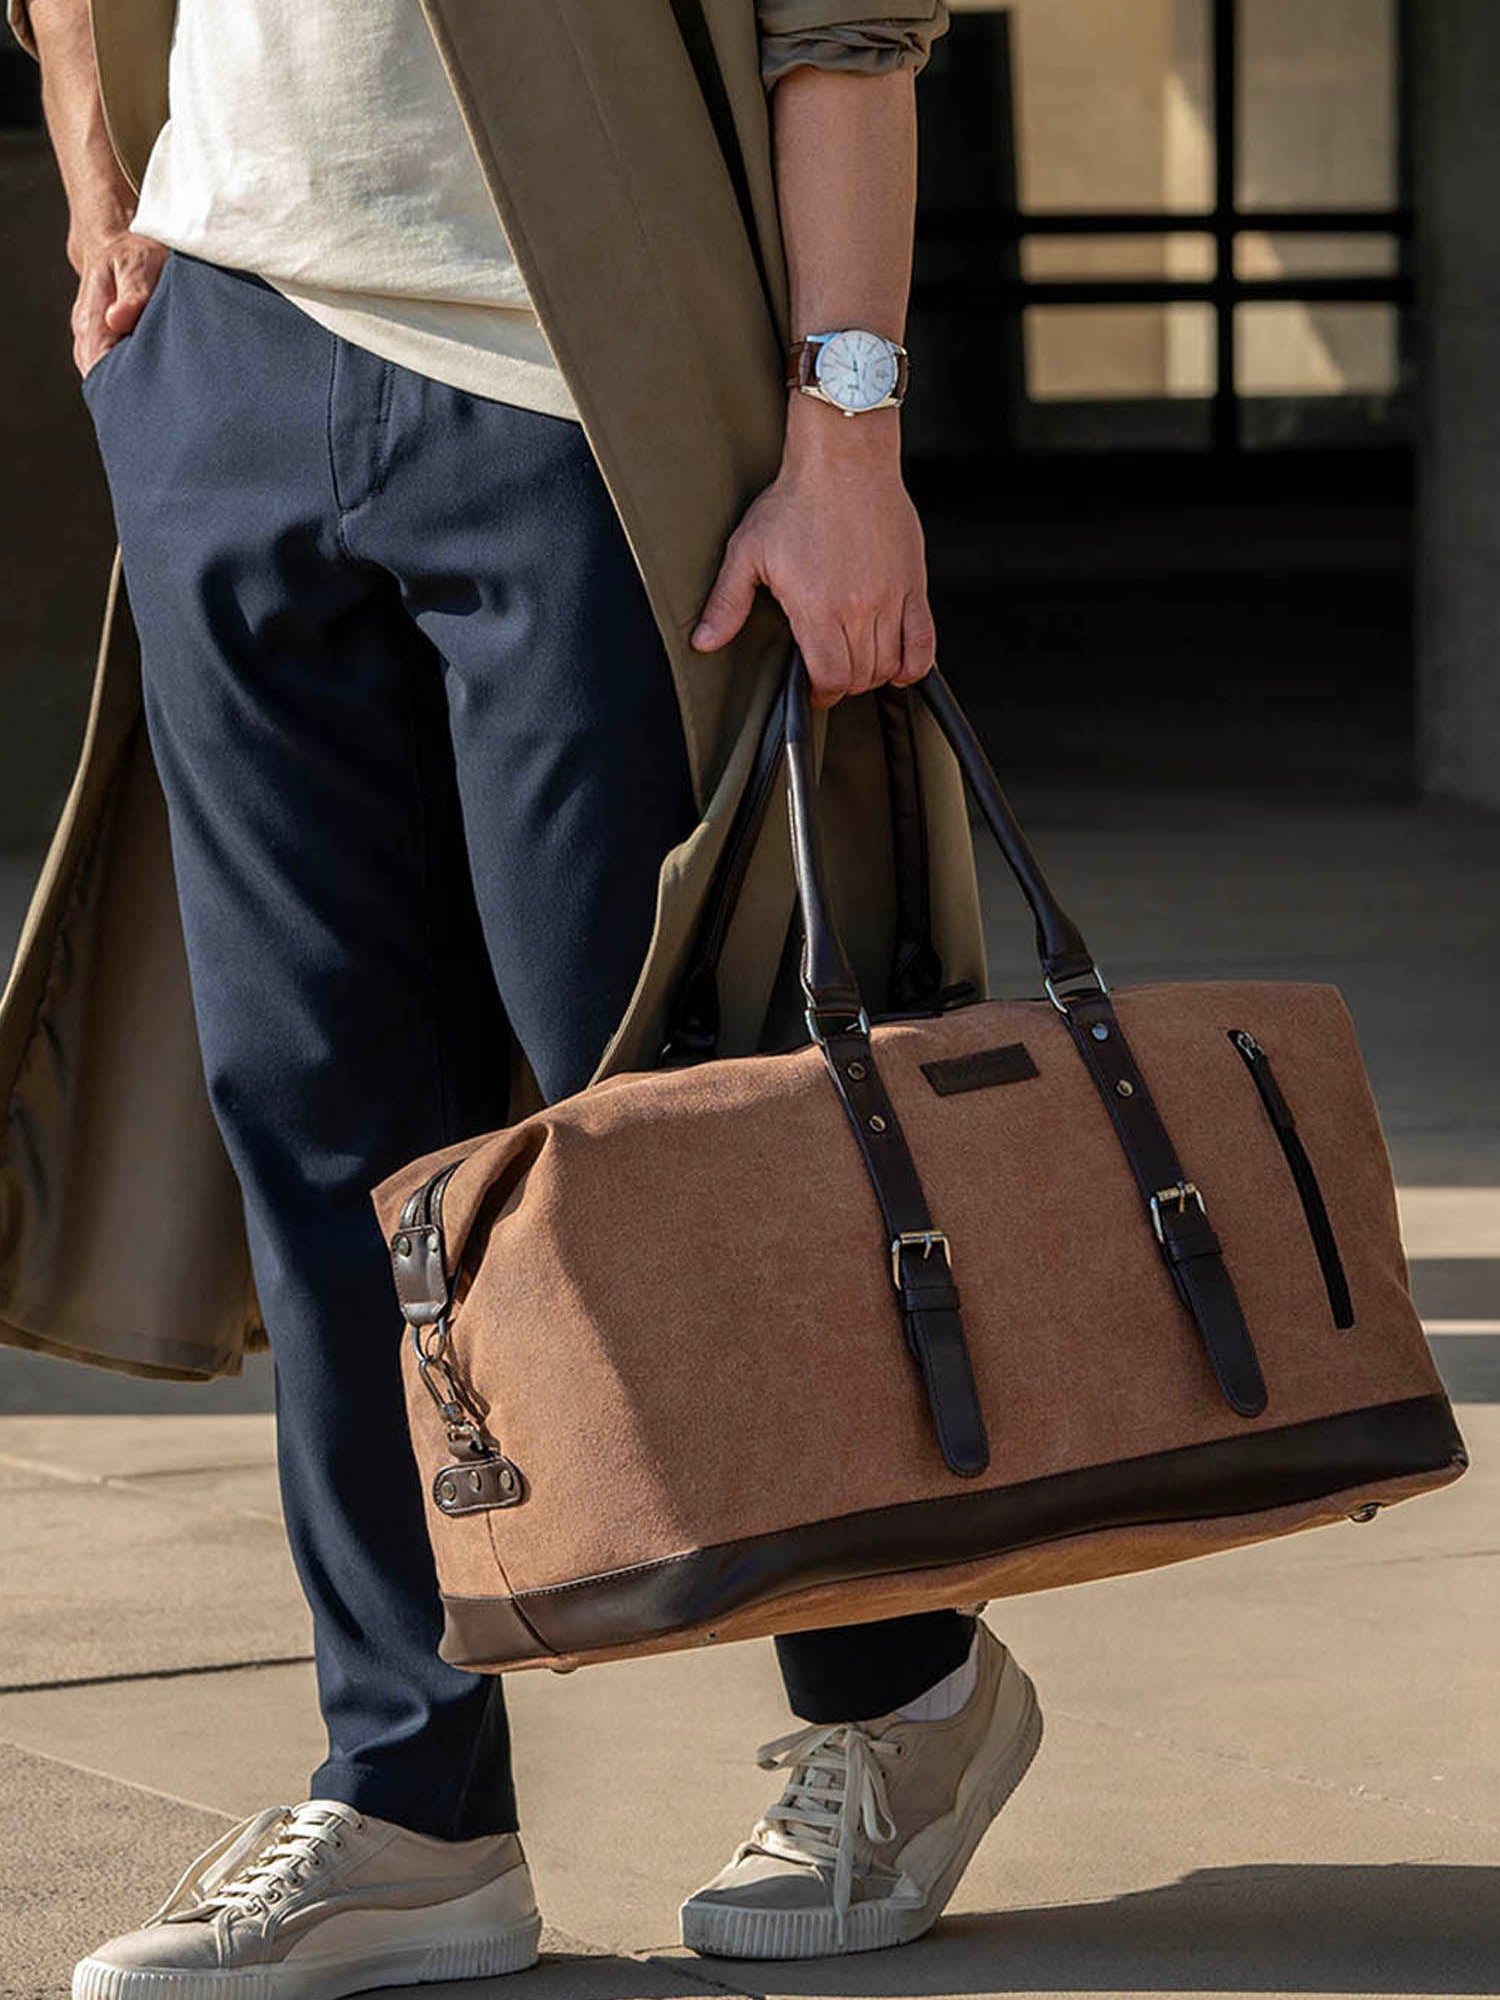 Buy Lavie Sport Strato Medium 55 cms Duffle Bag for Travel | Travel Duffle  Bag at Amazon.in